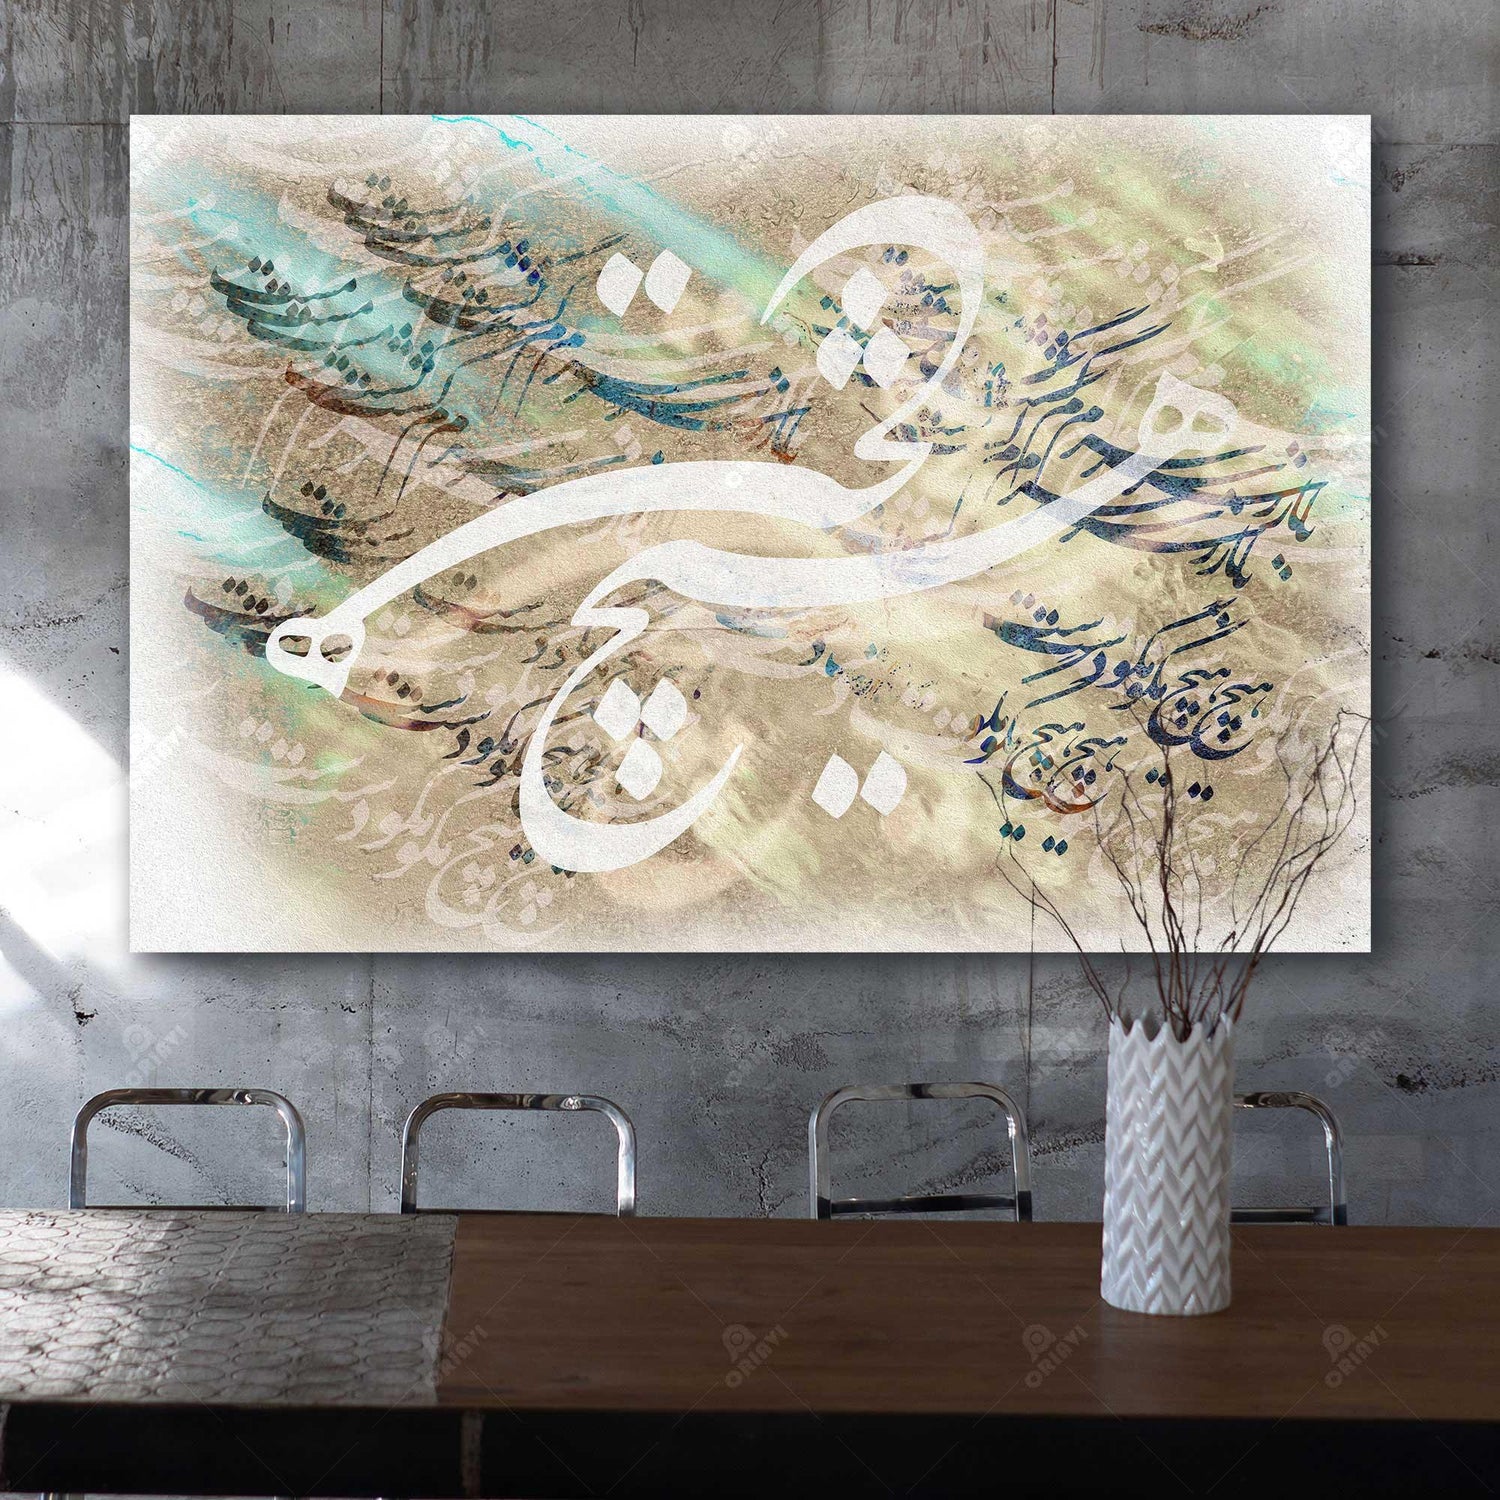 باز سرم گشت مست هیچ مگو دست دست - Persian calligraphy wall art, High Quality and Ready to Hang. This Modern Persian Wall décor completes and elevates your home. Amazing and eye-catching for your home or office.